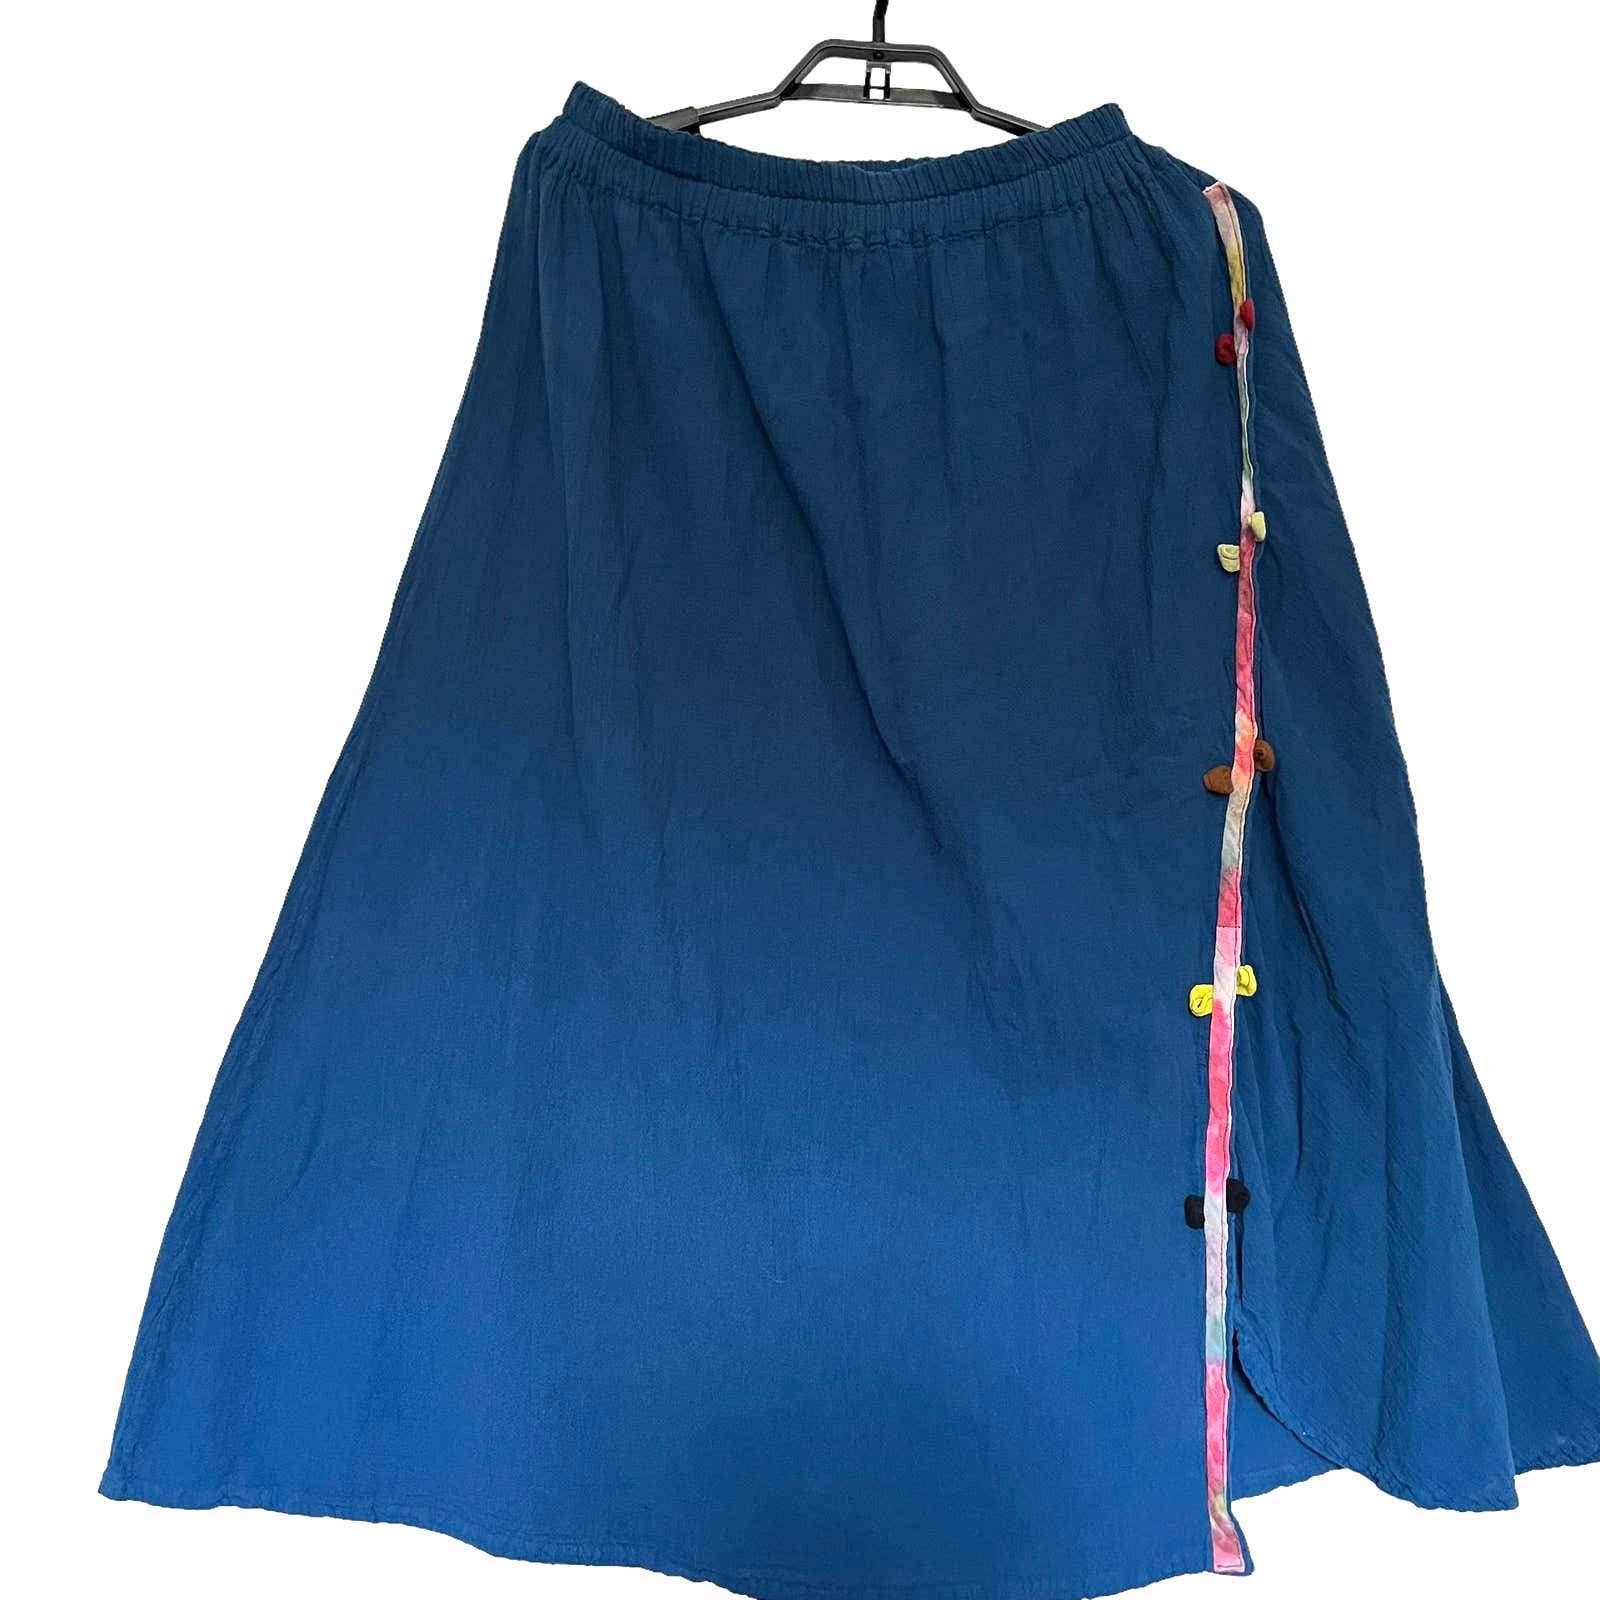 COTTONWAYS Faux Wrap Full Maxi Skirt Size 4 (4X) Blue Striped Loop Trim Gauzy RN6BOJWLx